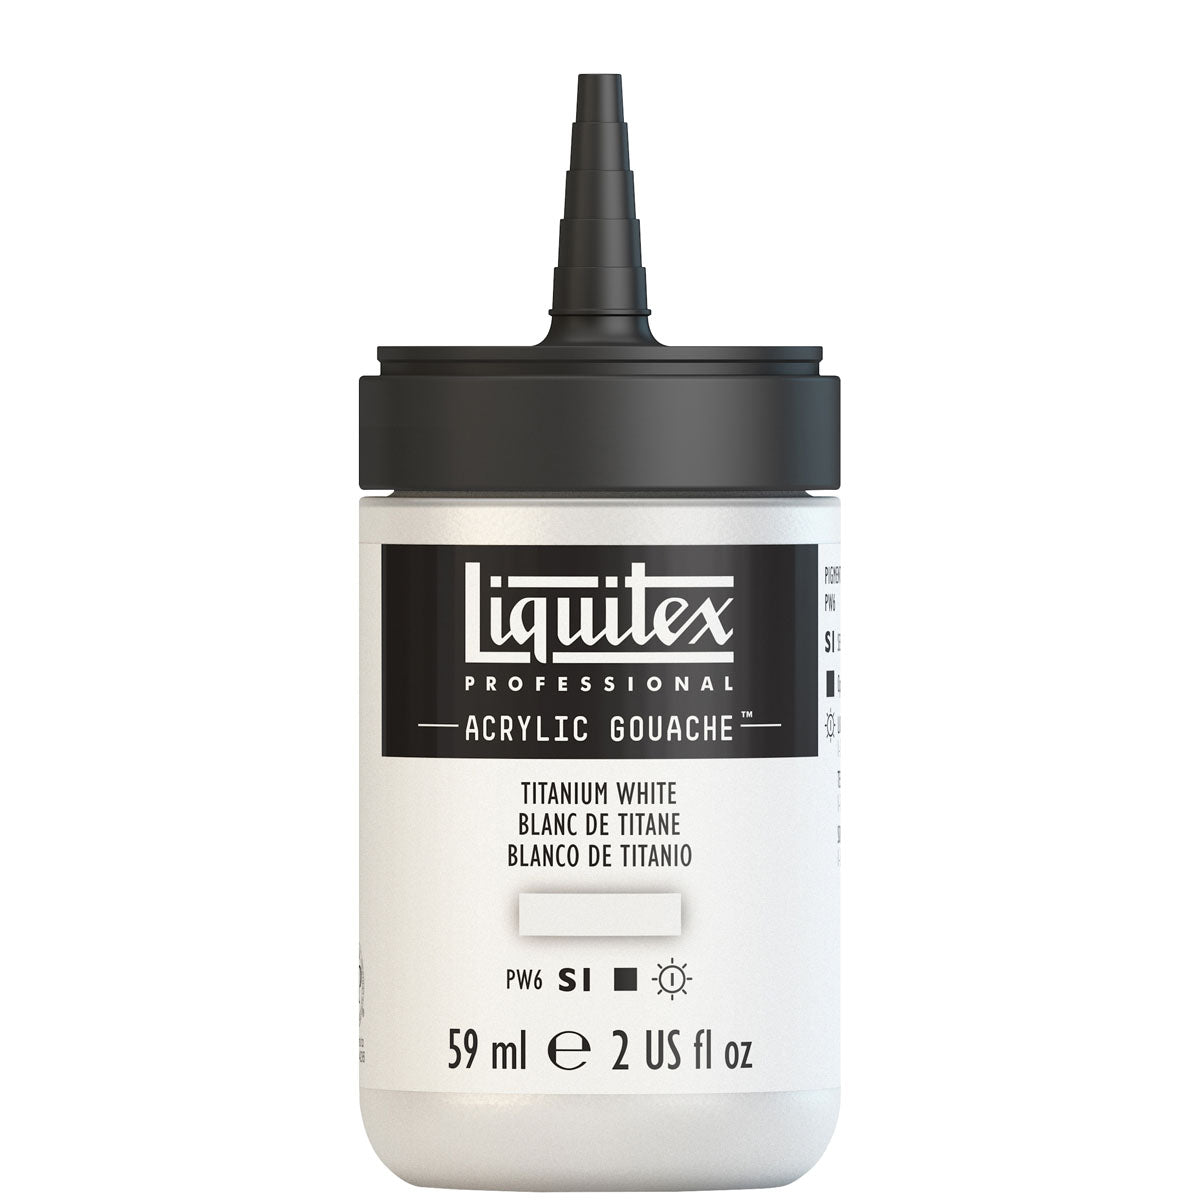 Liquitex - Acrylic Gouache 59ml S1 - Titanium White